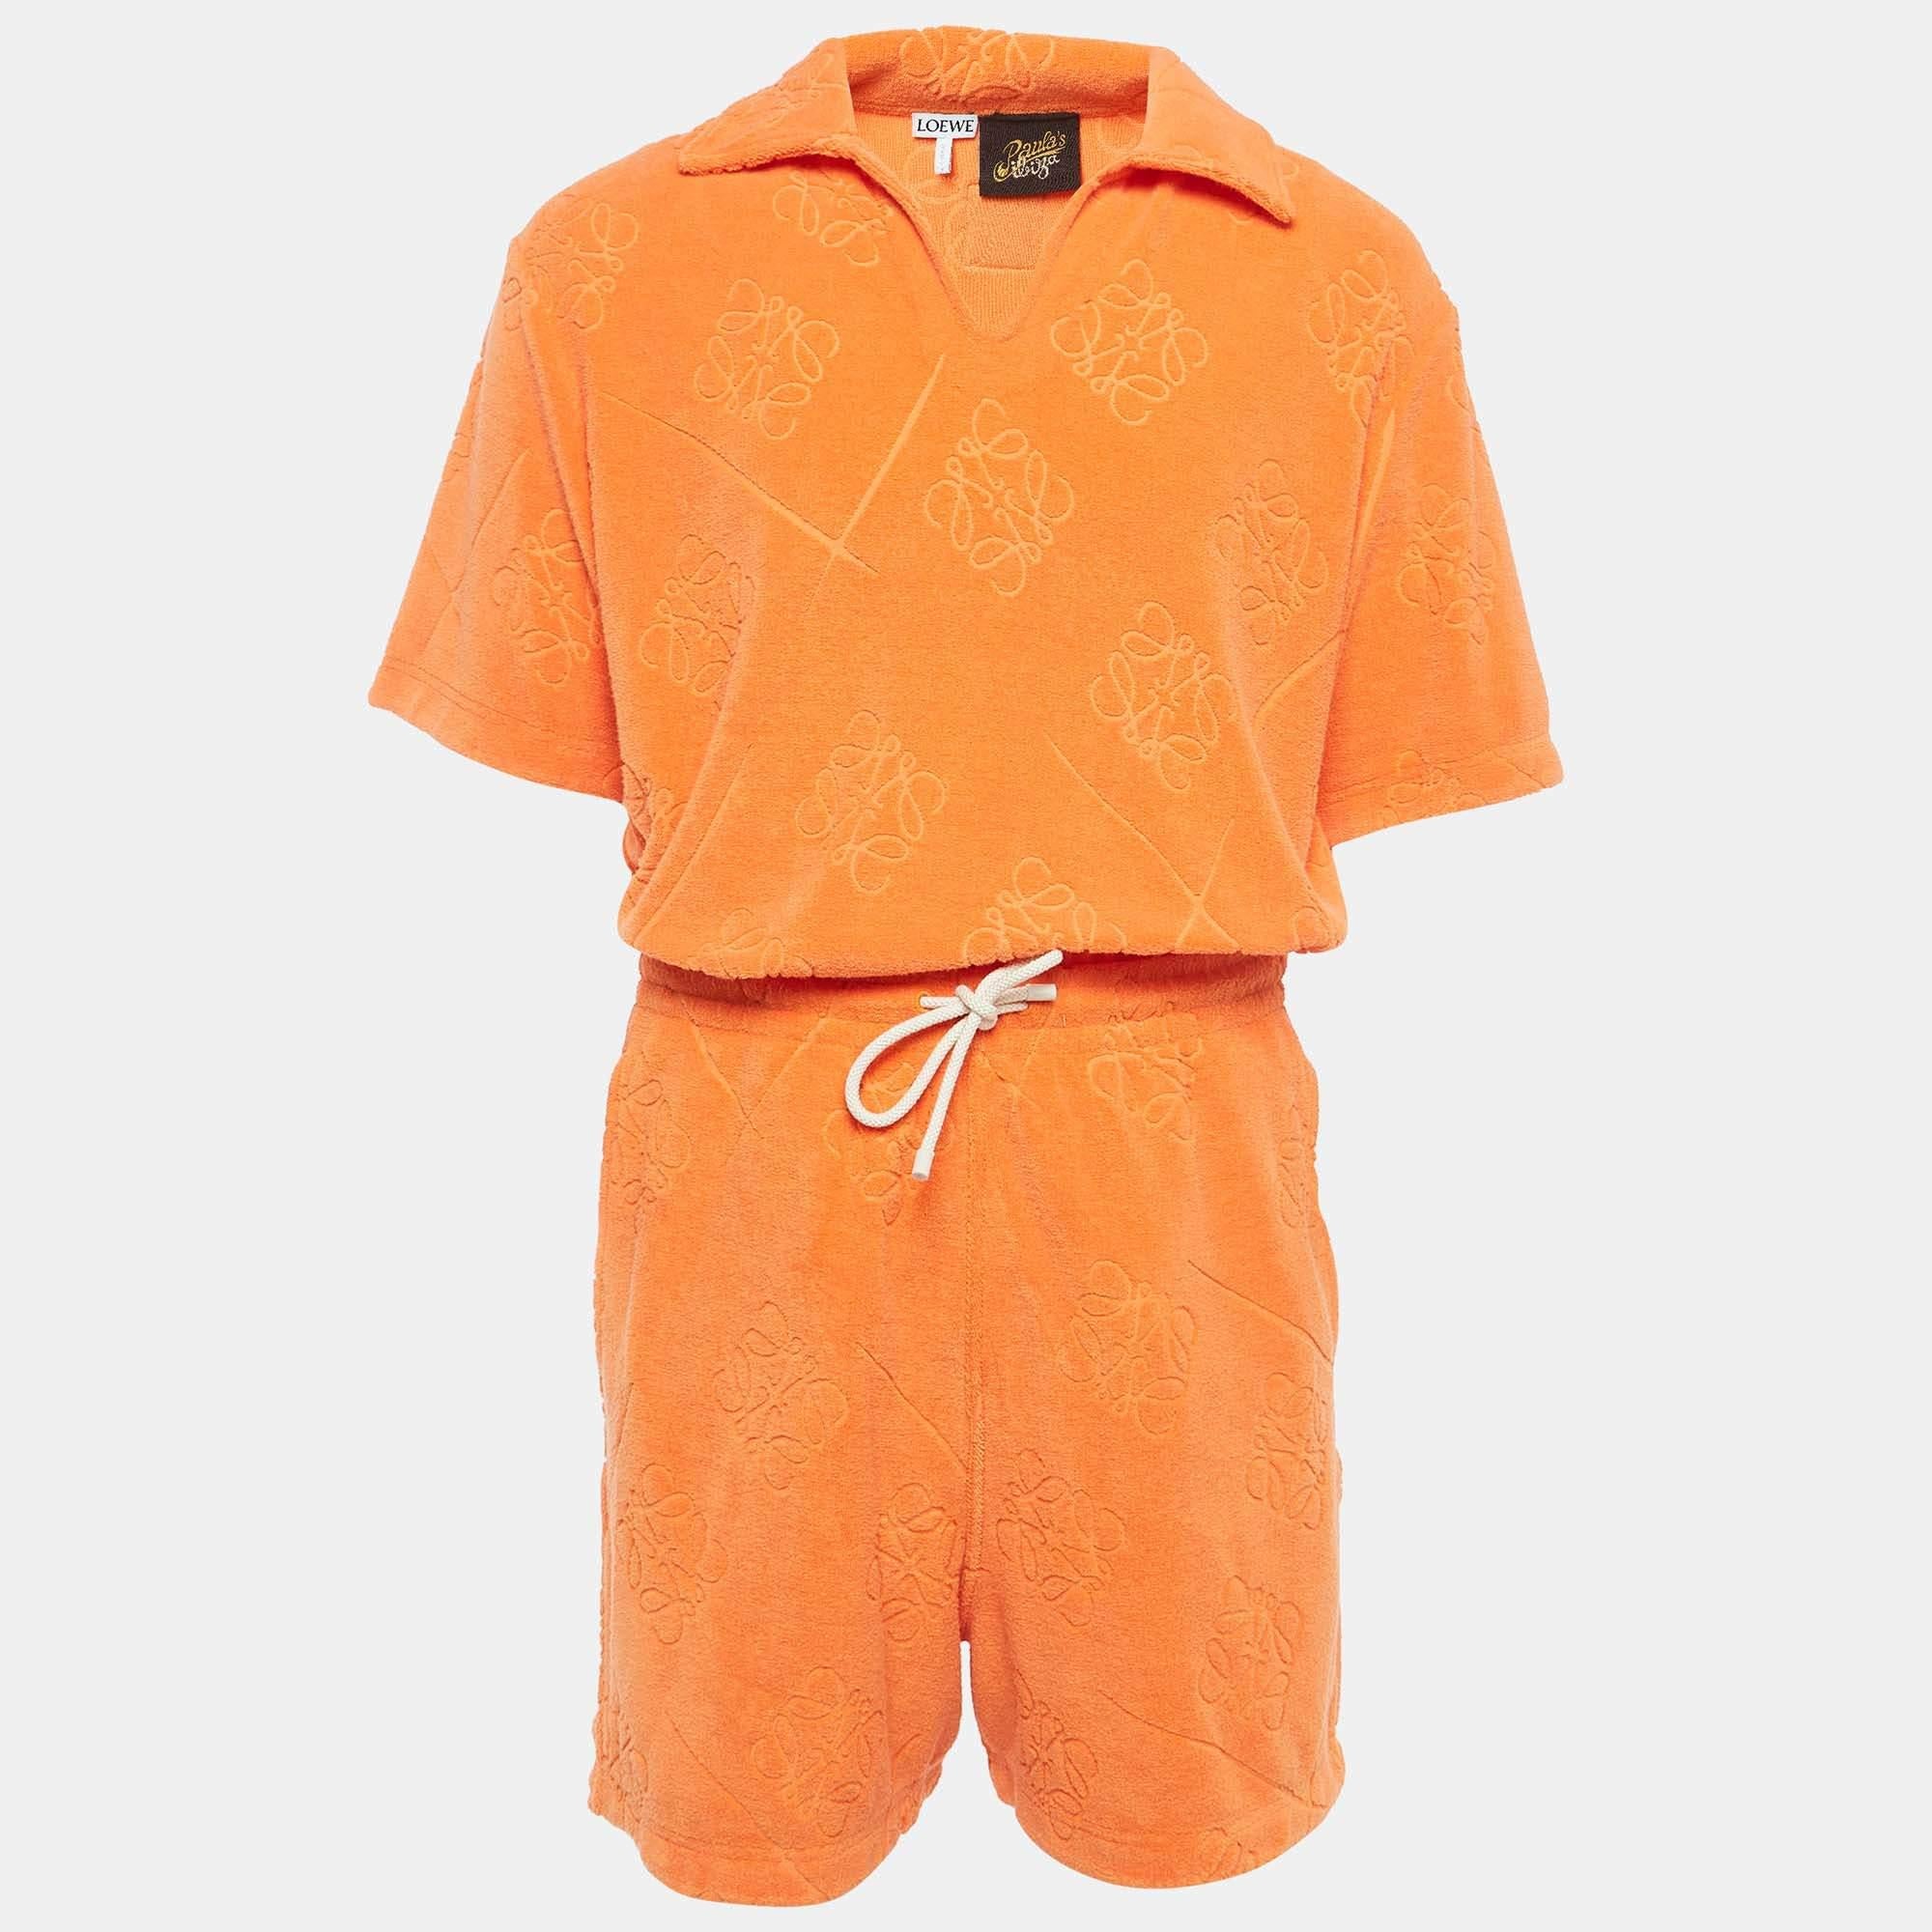 Loewe X Paula Ibiza Orange Anagram Terry Cotton Shirt & Shorts Set M For Sale 3